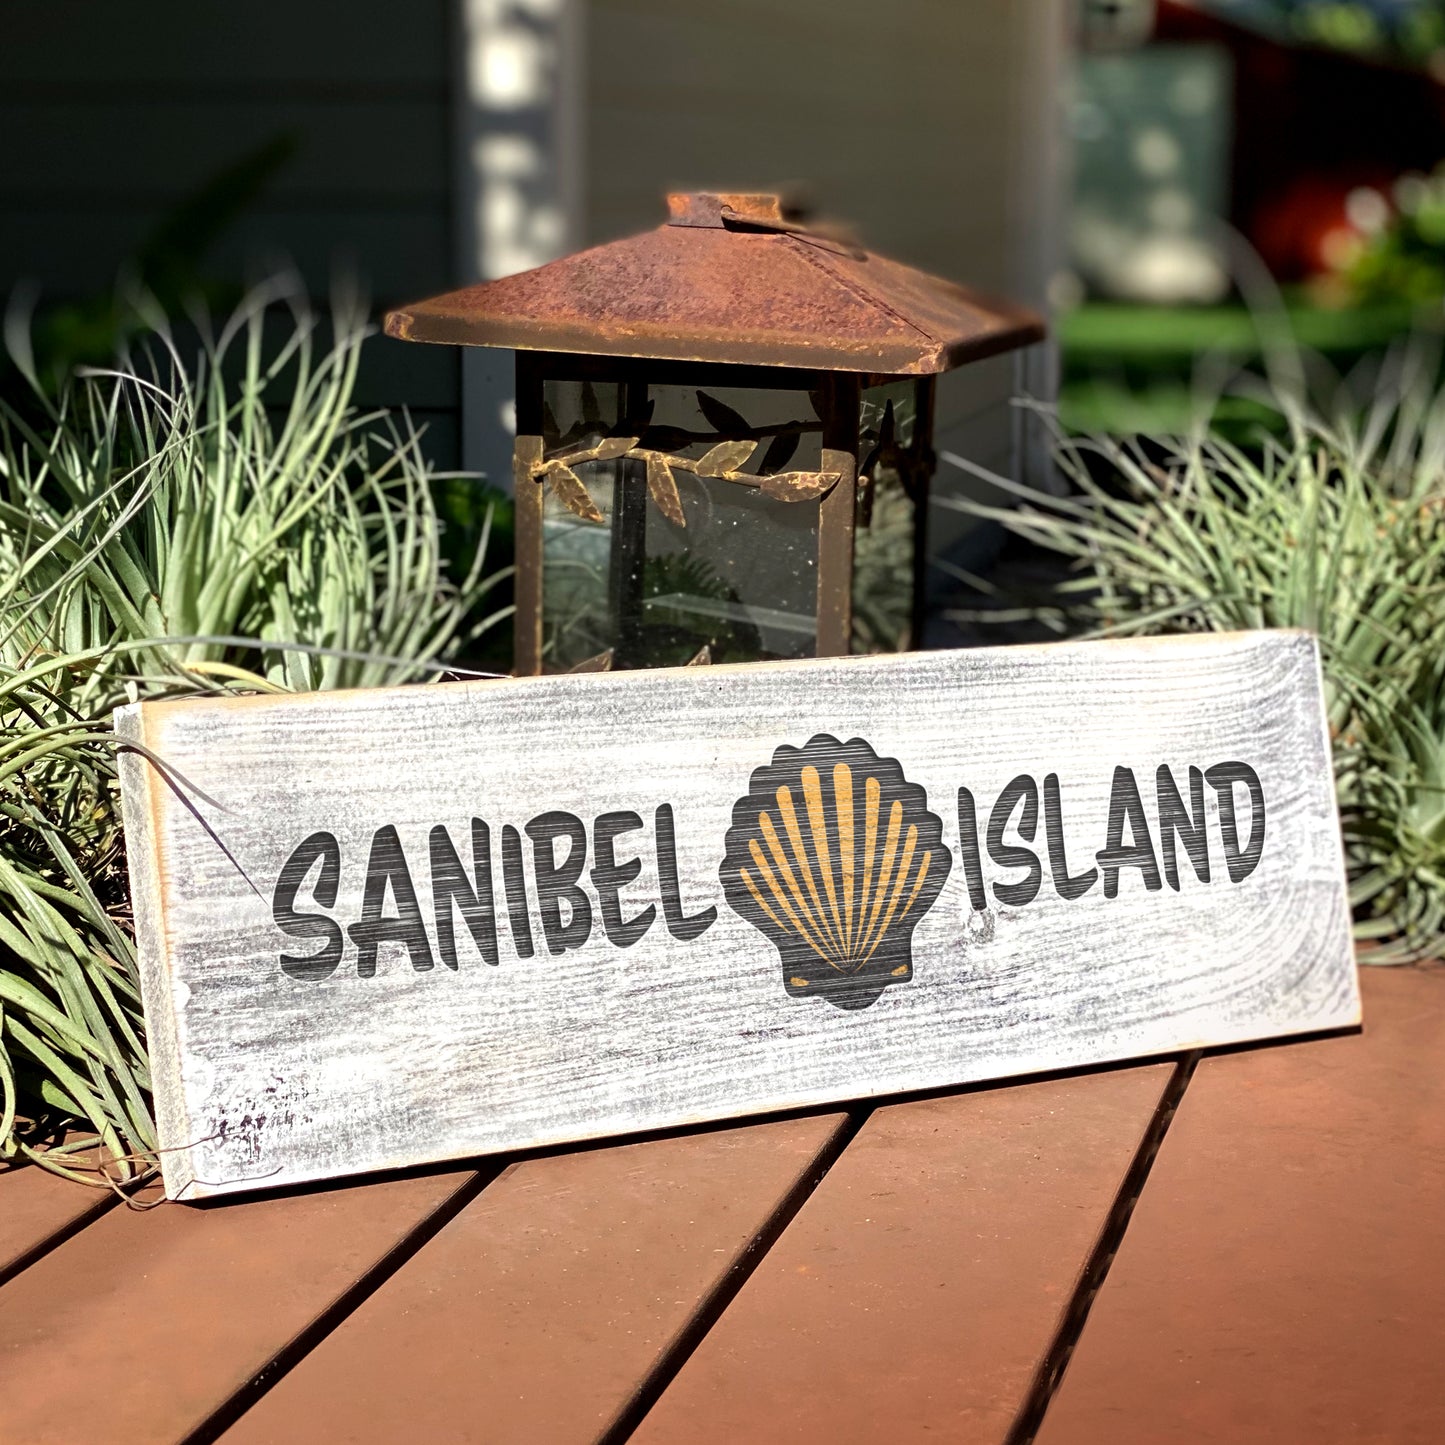 Sanibel Island - Handcrafted Artisan Wood Sign